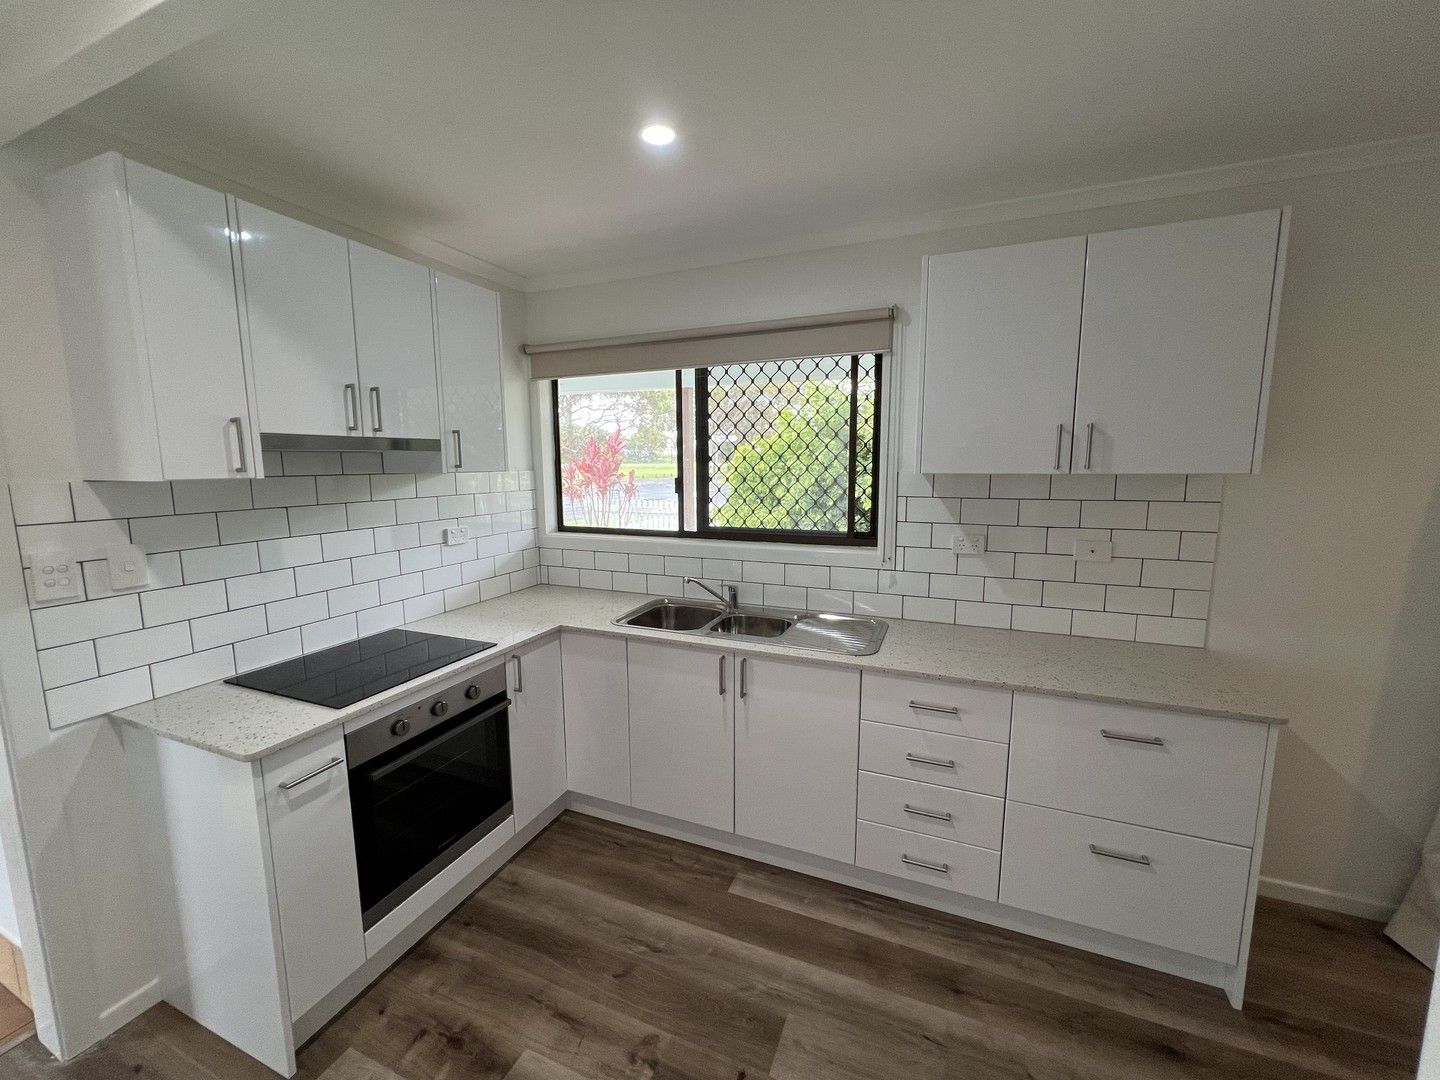 2 bedrooms Apartment / Unit / Flat in 1/6 Owen Street BALLINA NSW, 2478